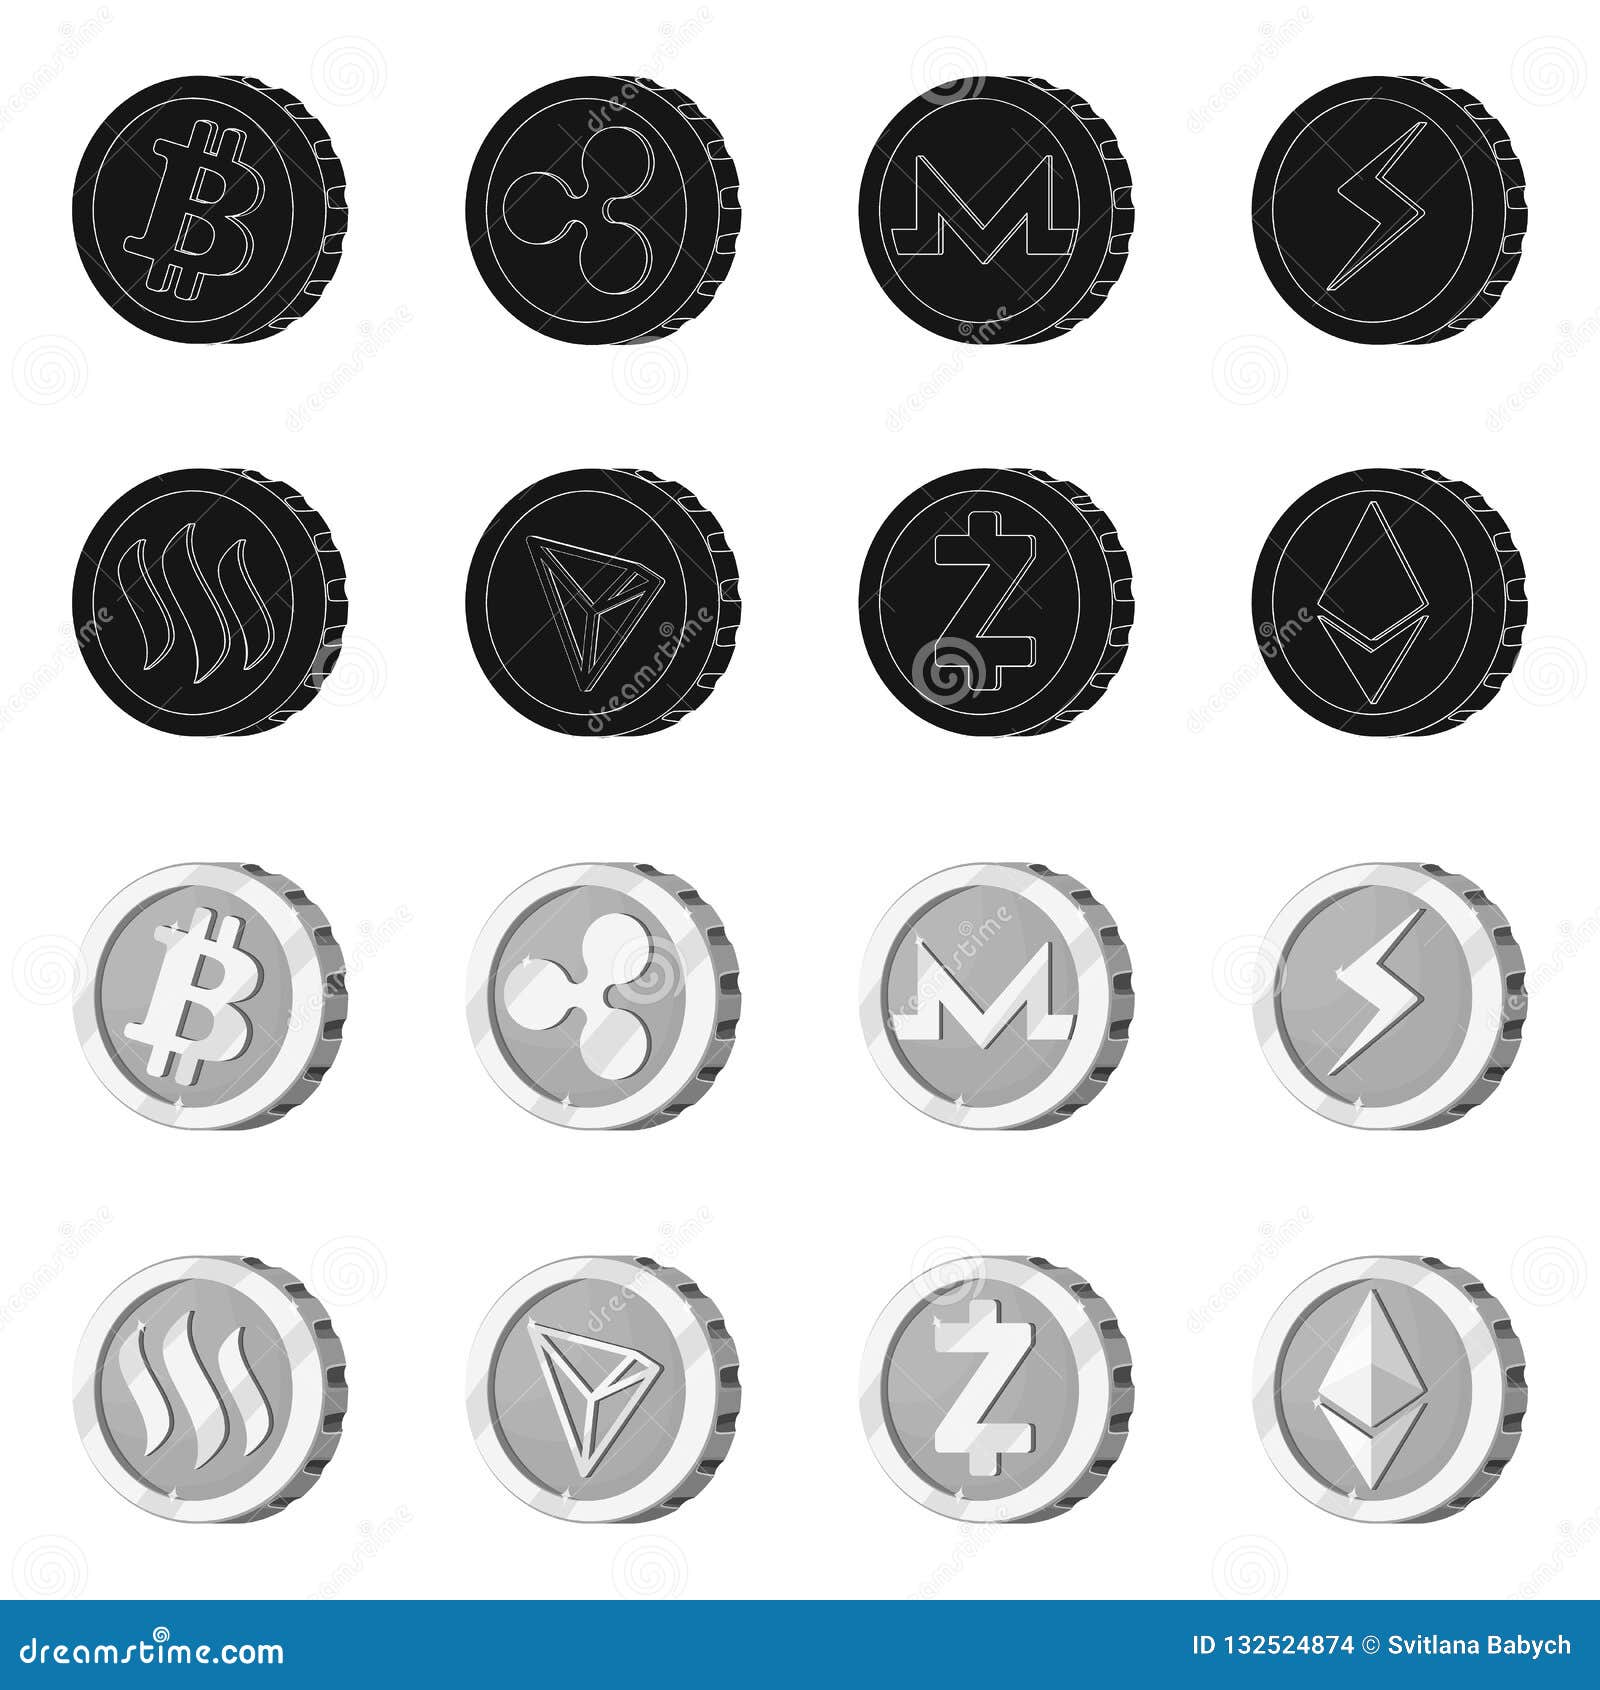 Crypto coin icon generator buy runescape gold btc